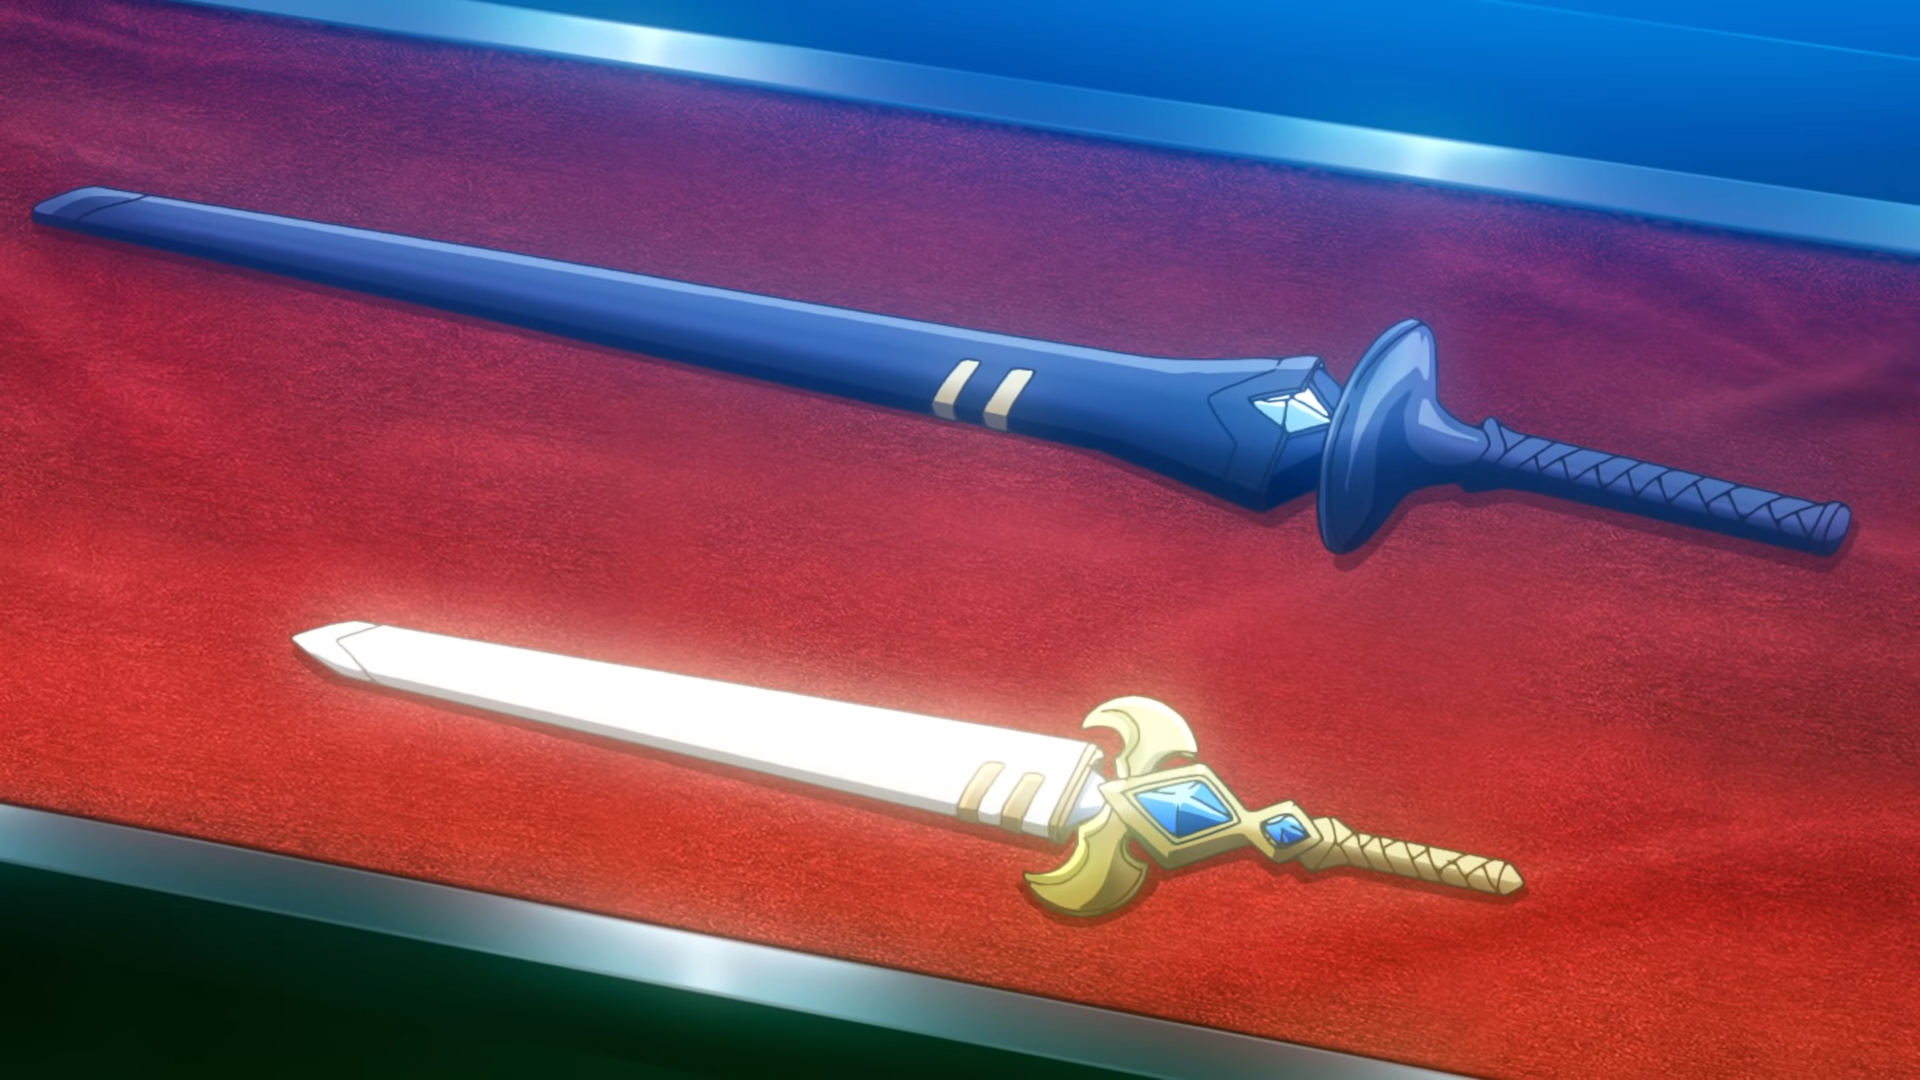 Anime Fandom Nine Hashira Nichirin Swords Gift Box – Leones Marvelous Items